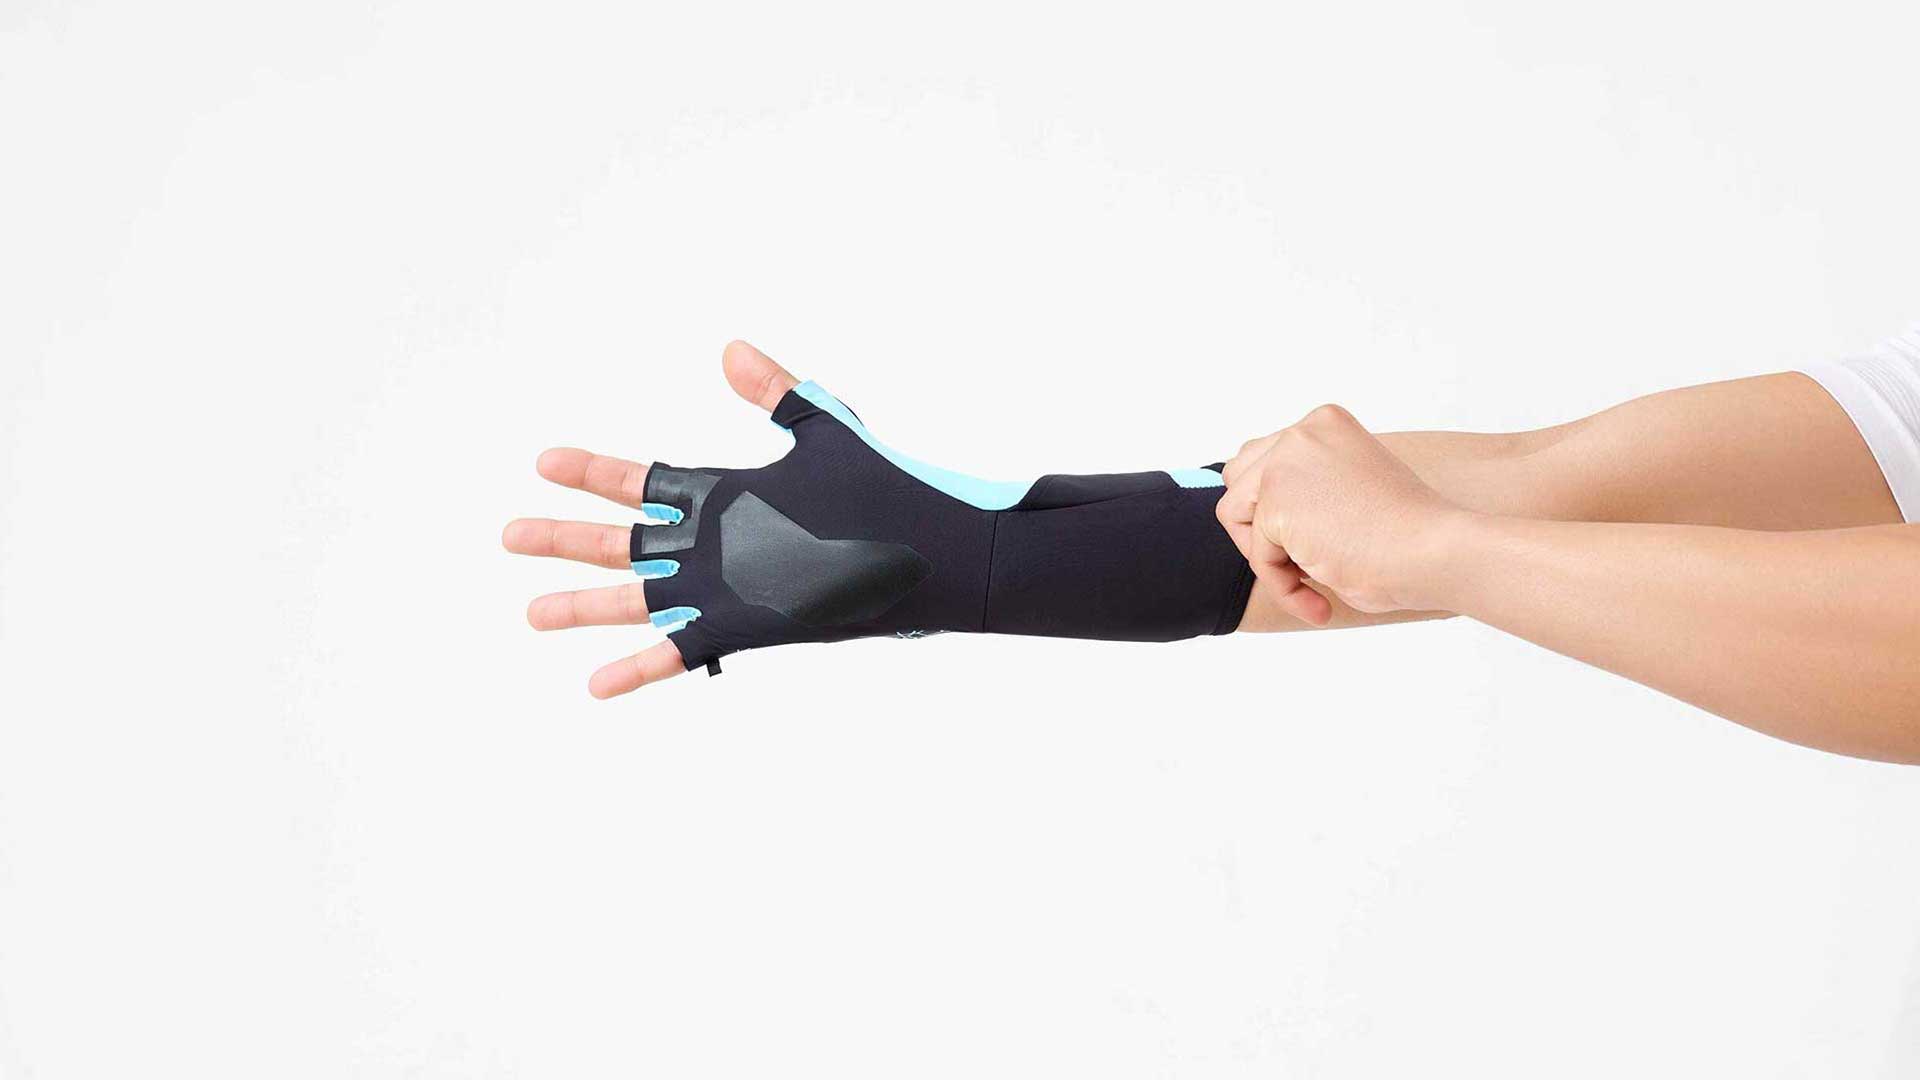 Sub-Zero Glove manufacturer